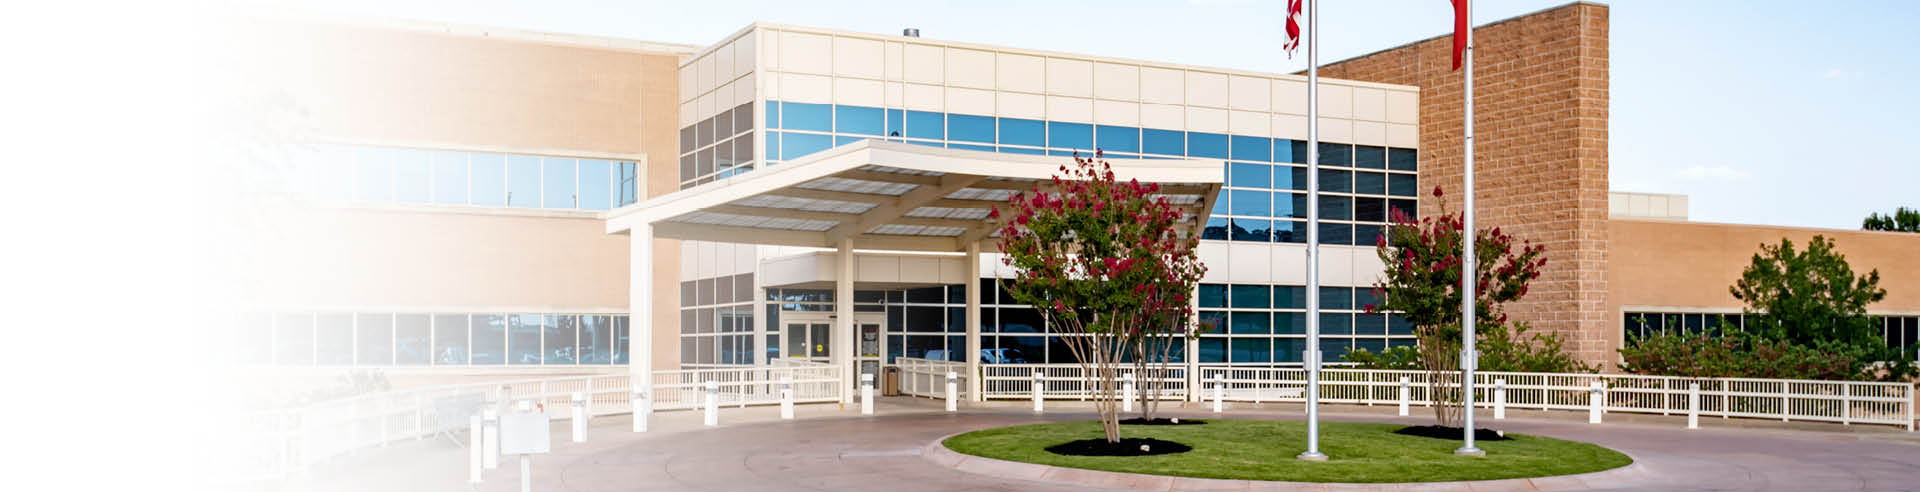 Encompass Health Rehabilitation Hospital of the Mid-Cities exterior